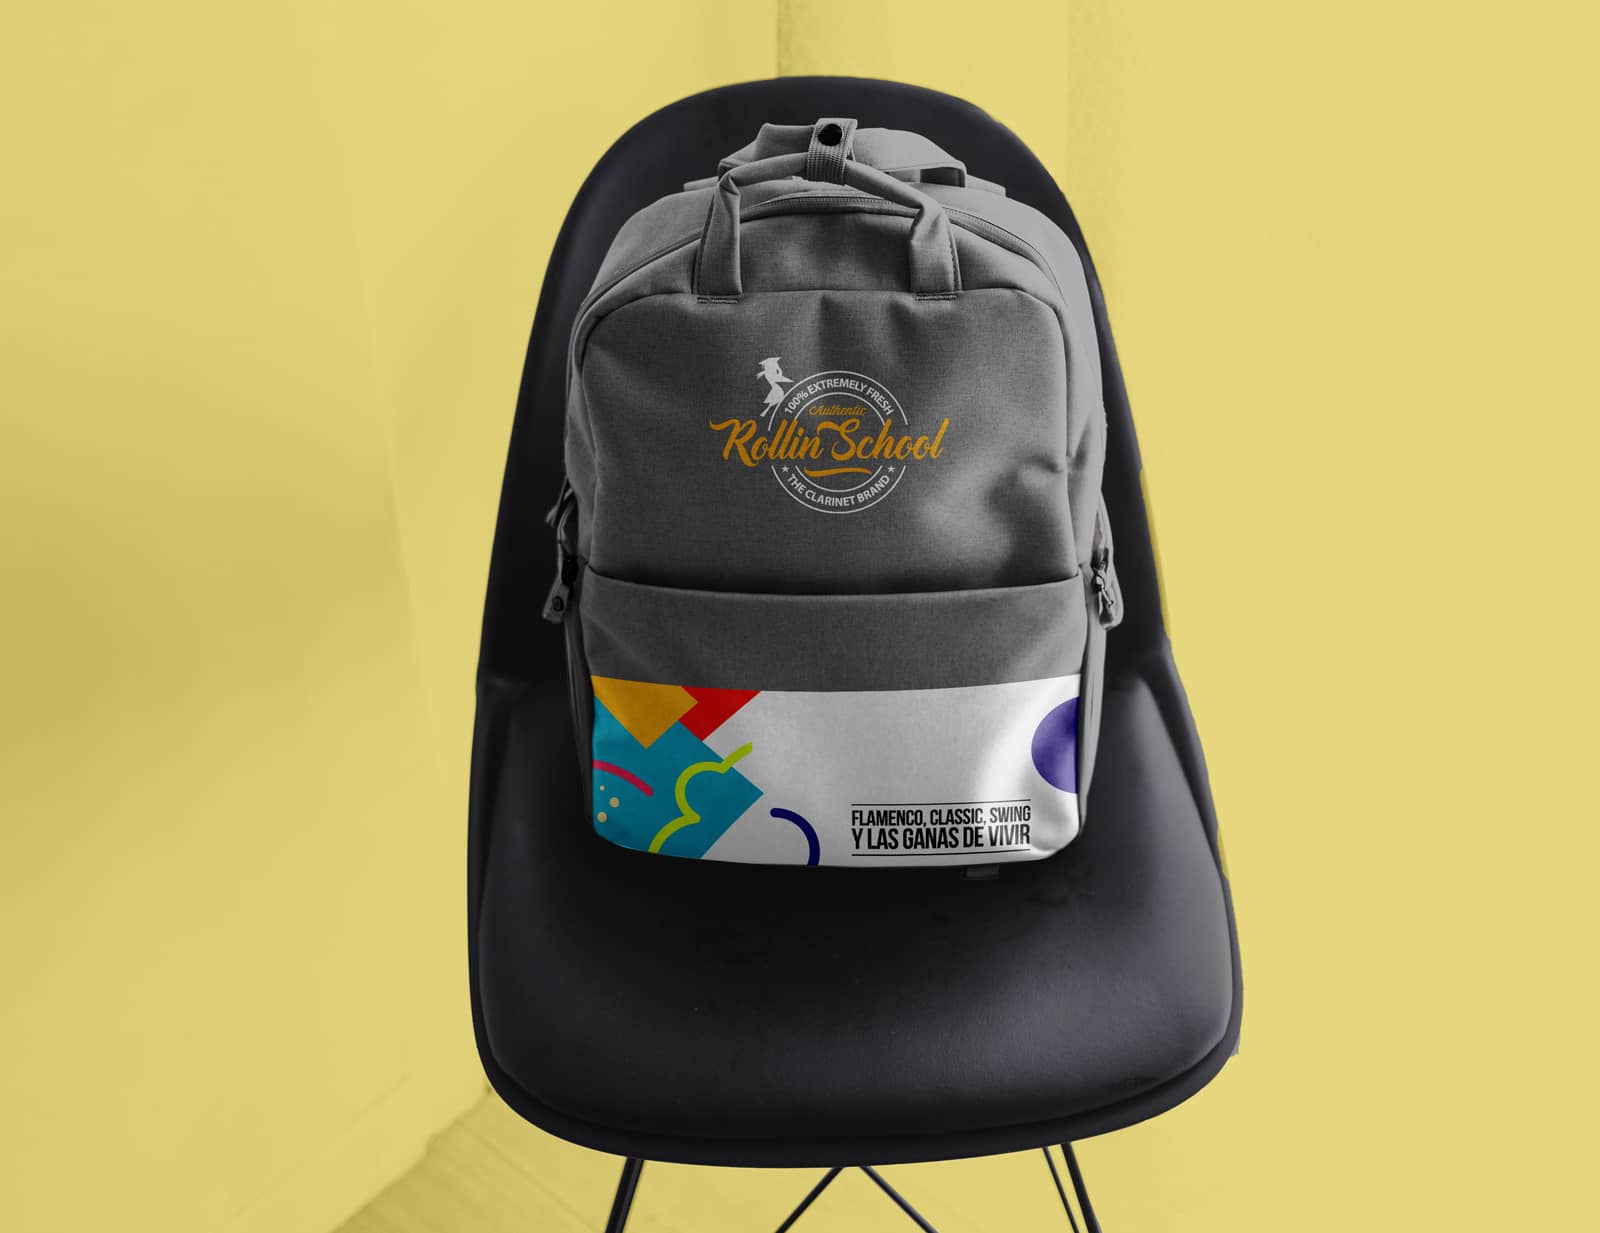 Backpack alumnos formas LRollin School branding por The Acctitude